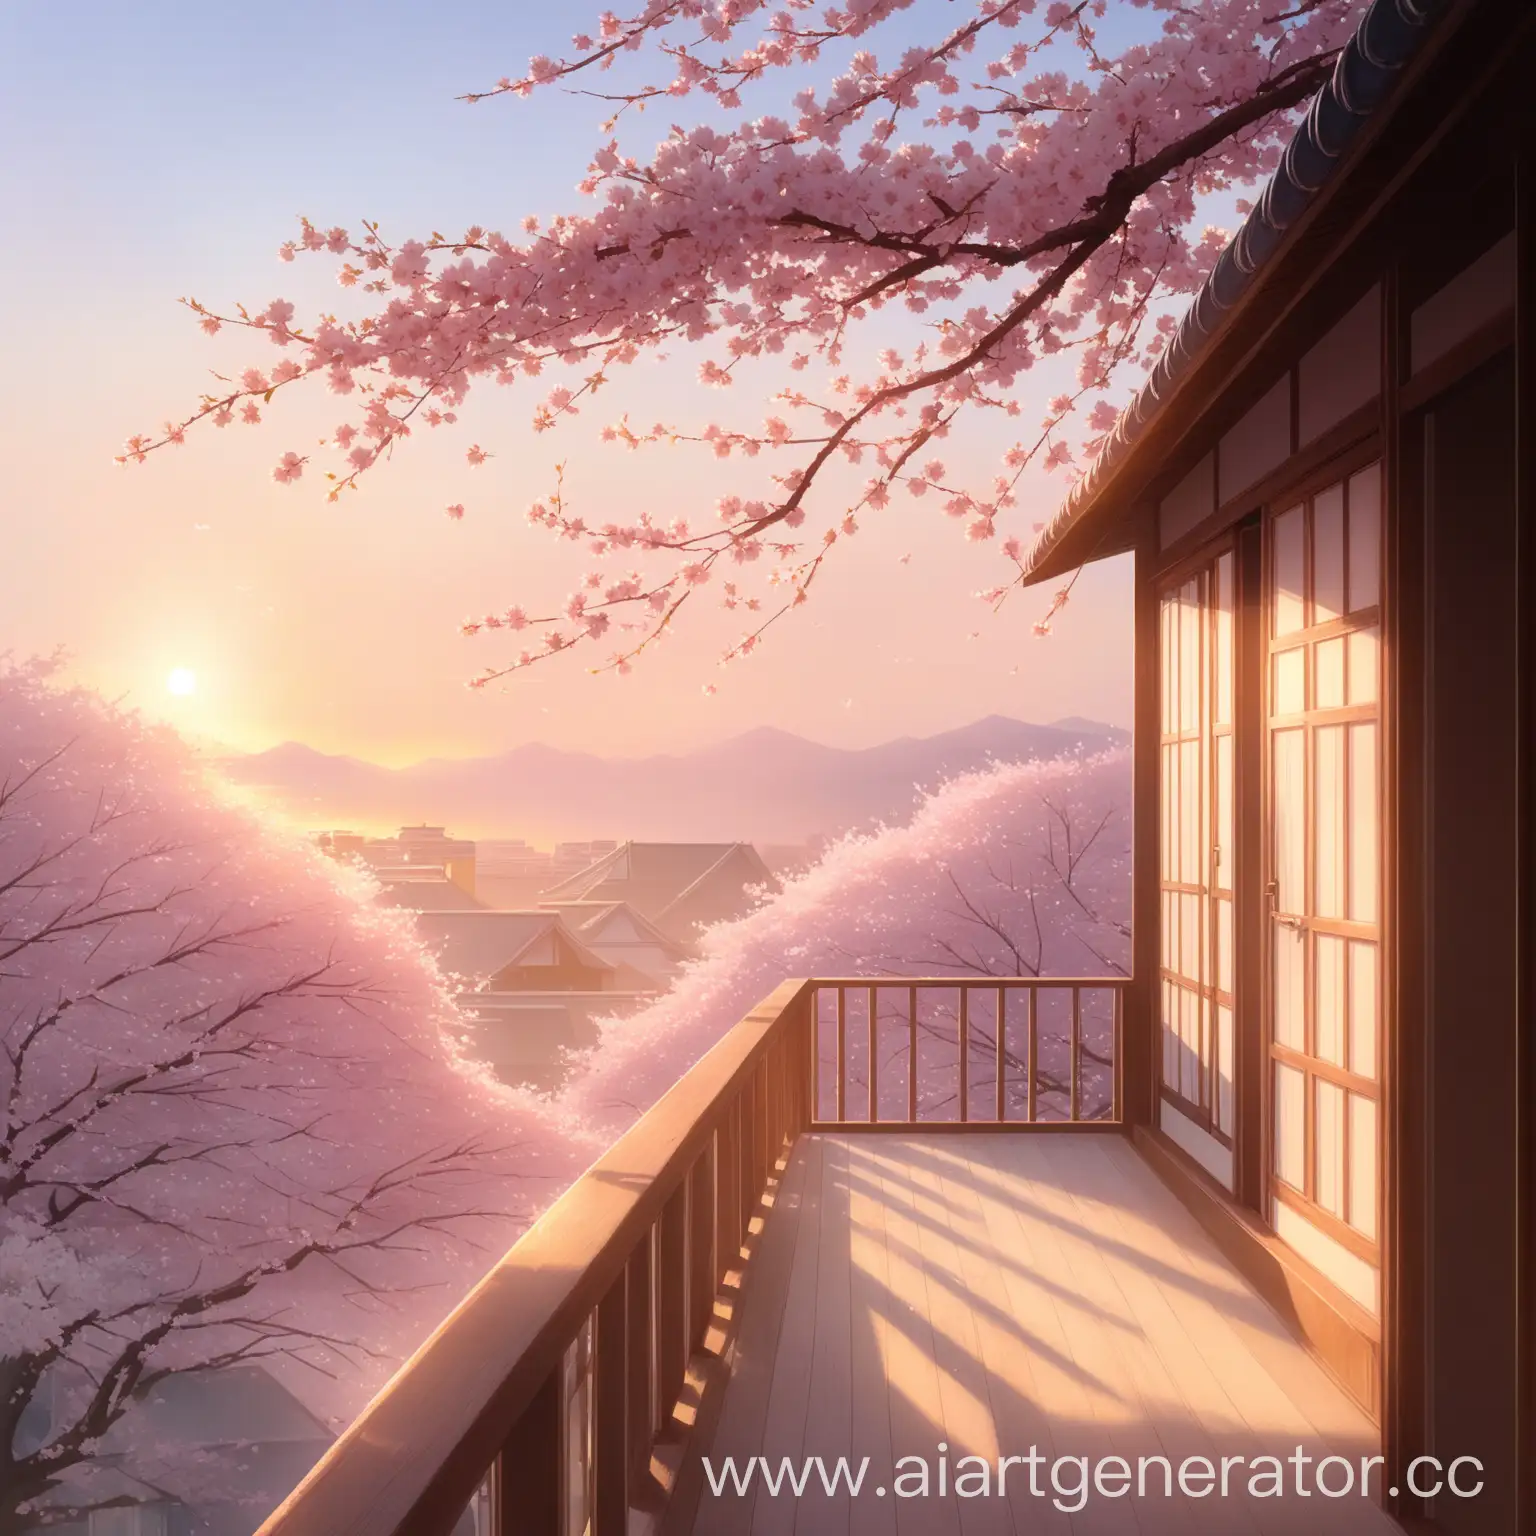 Morning-Sakura-Blossoms-in-Soft-Dawn-Light